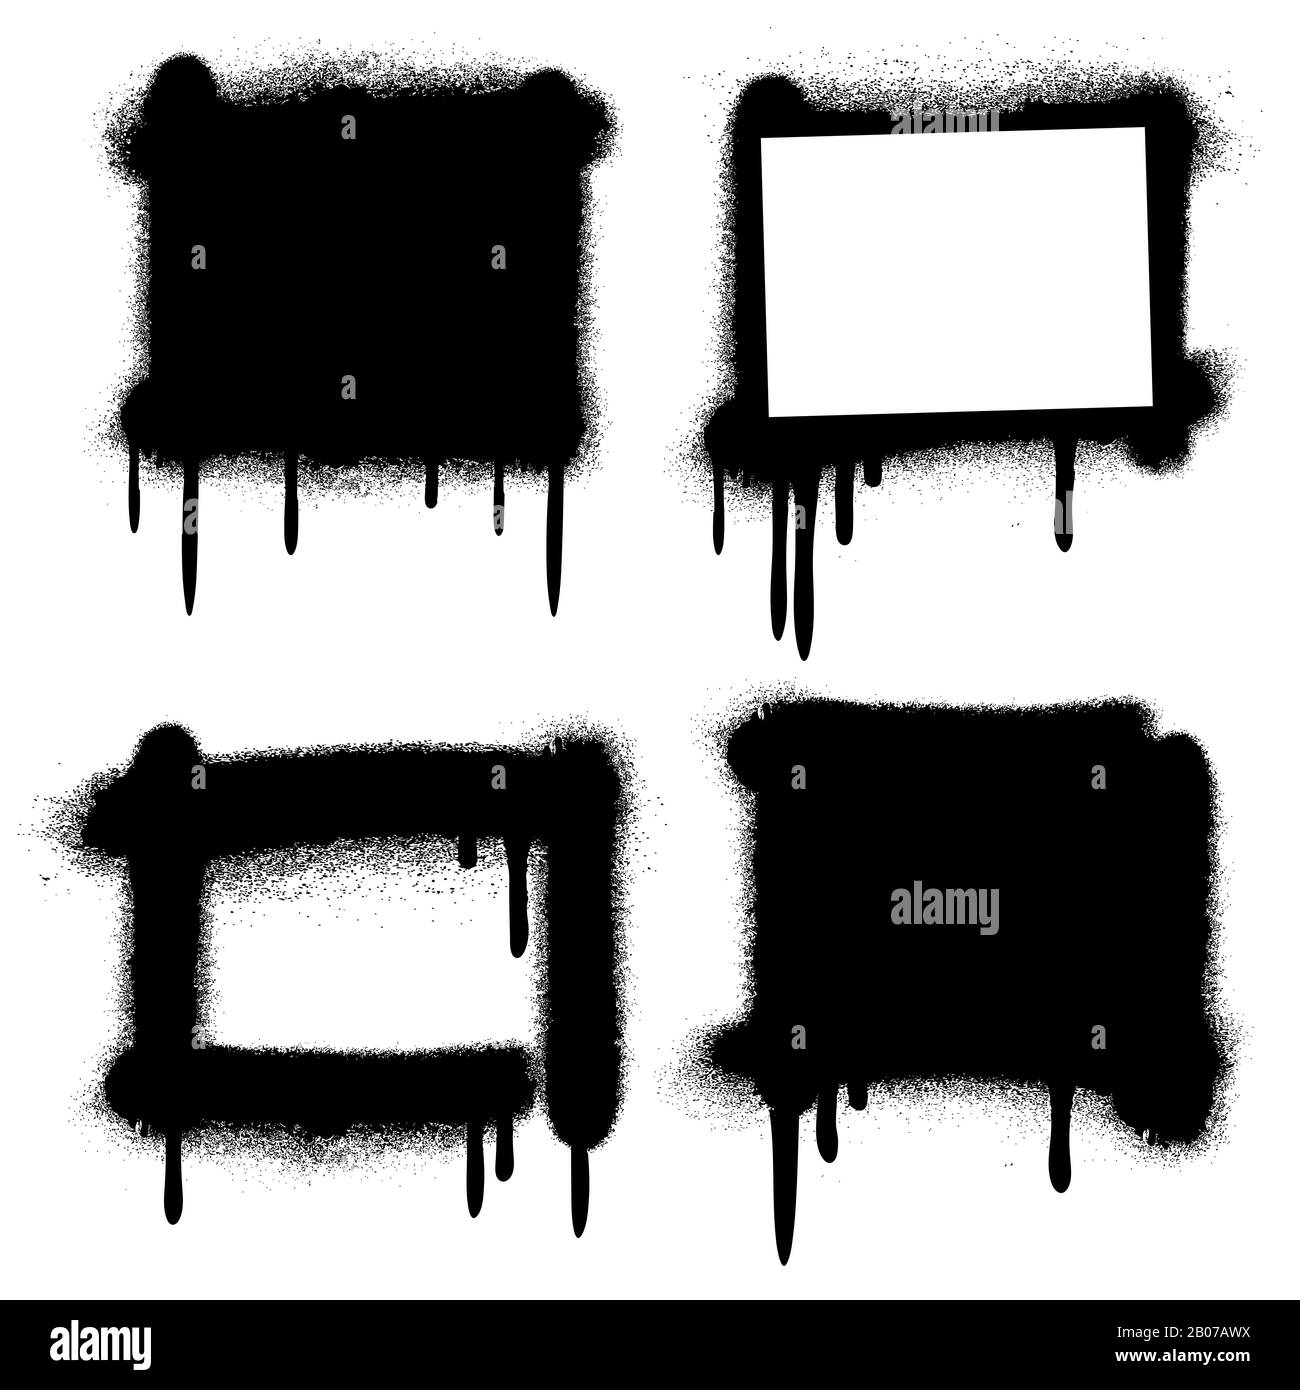 Spray paint graffiti grunge frames, banners. Messy silhouette monochrome black illustration Stock Vector